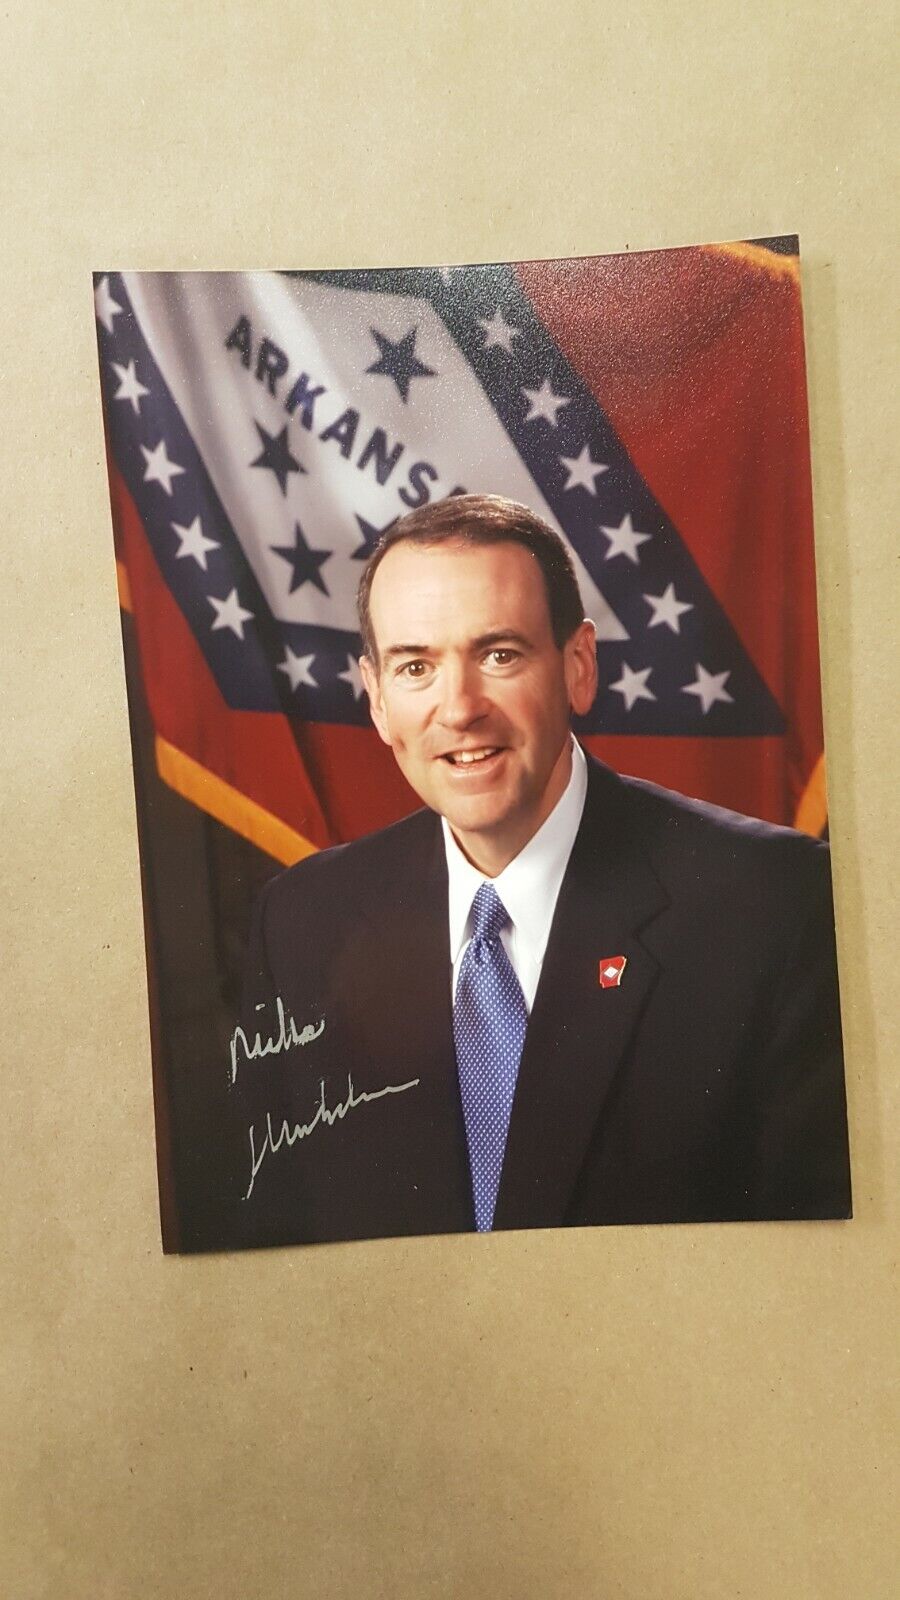 Mike Huckabee Autographed Photo 8x10 Politics Politician